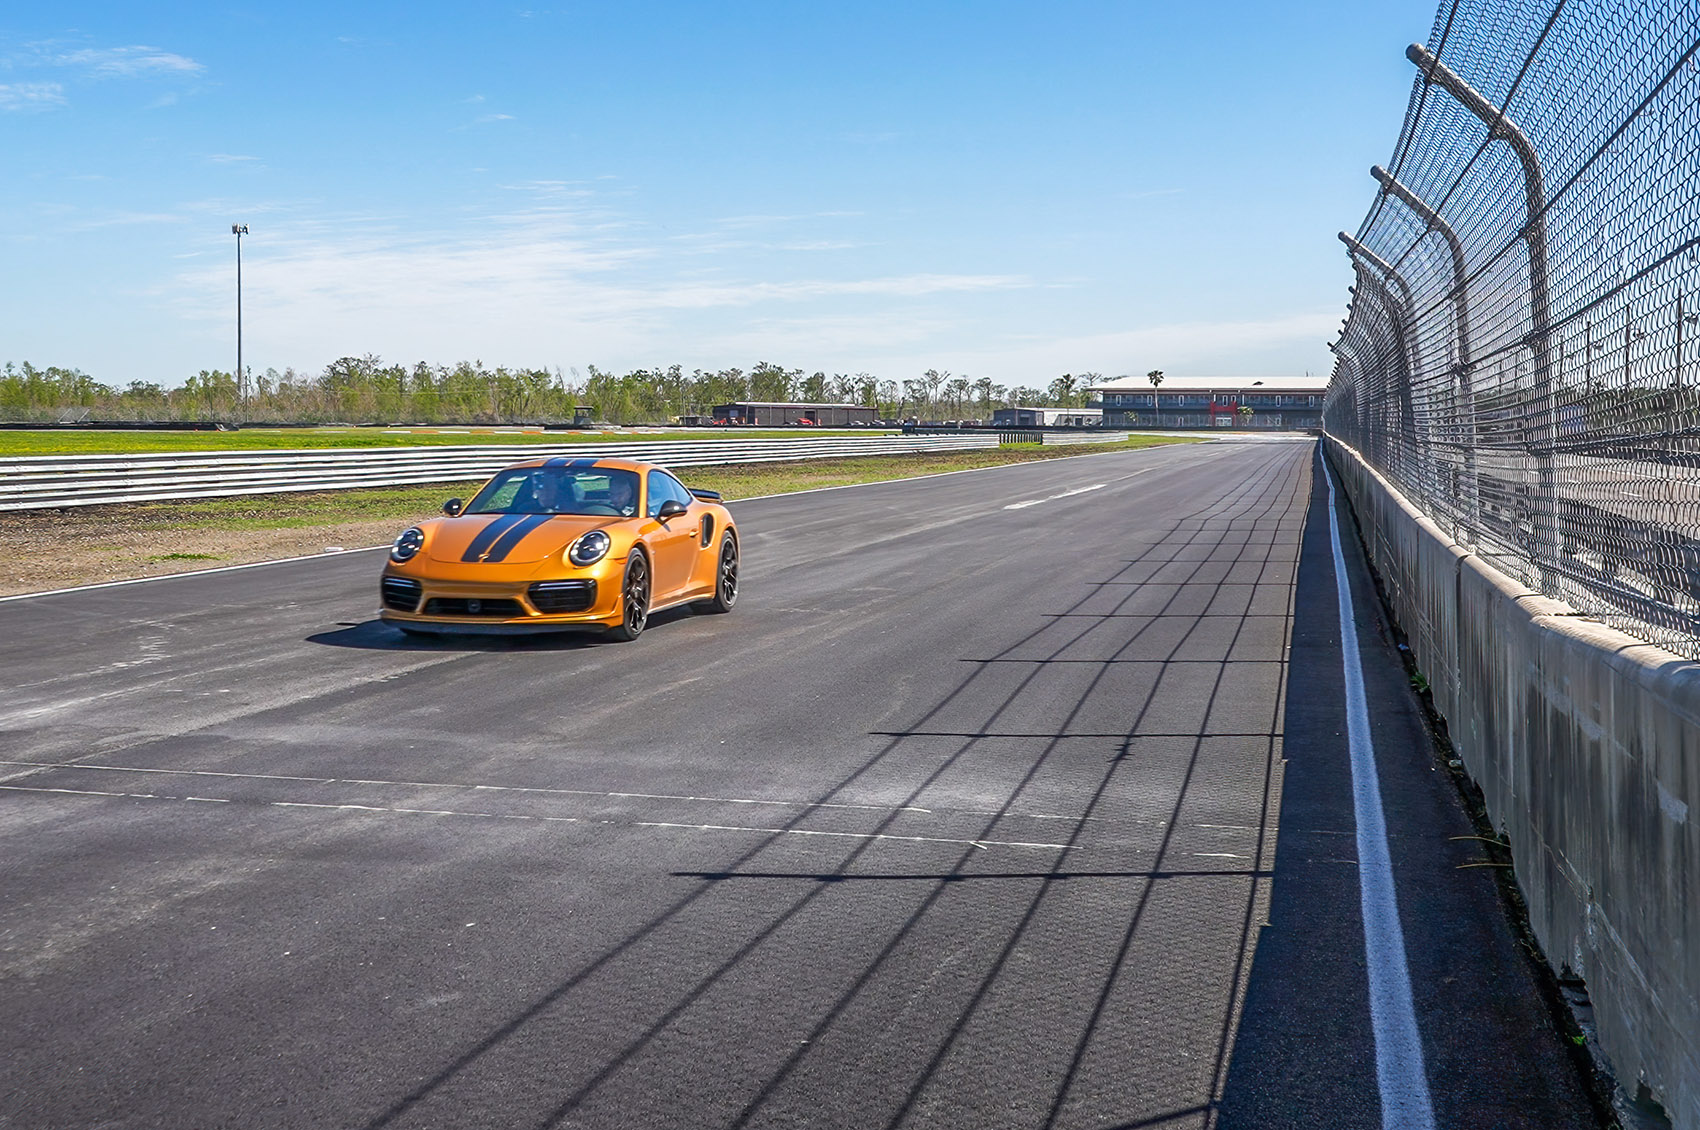 gold Porche car speeding by on track at NOLA Motorsports